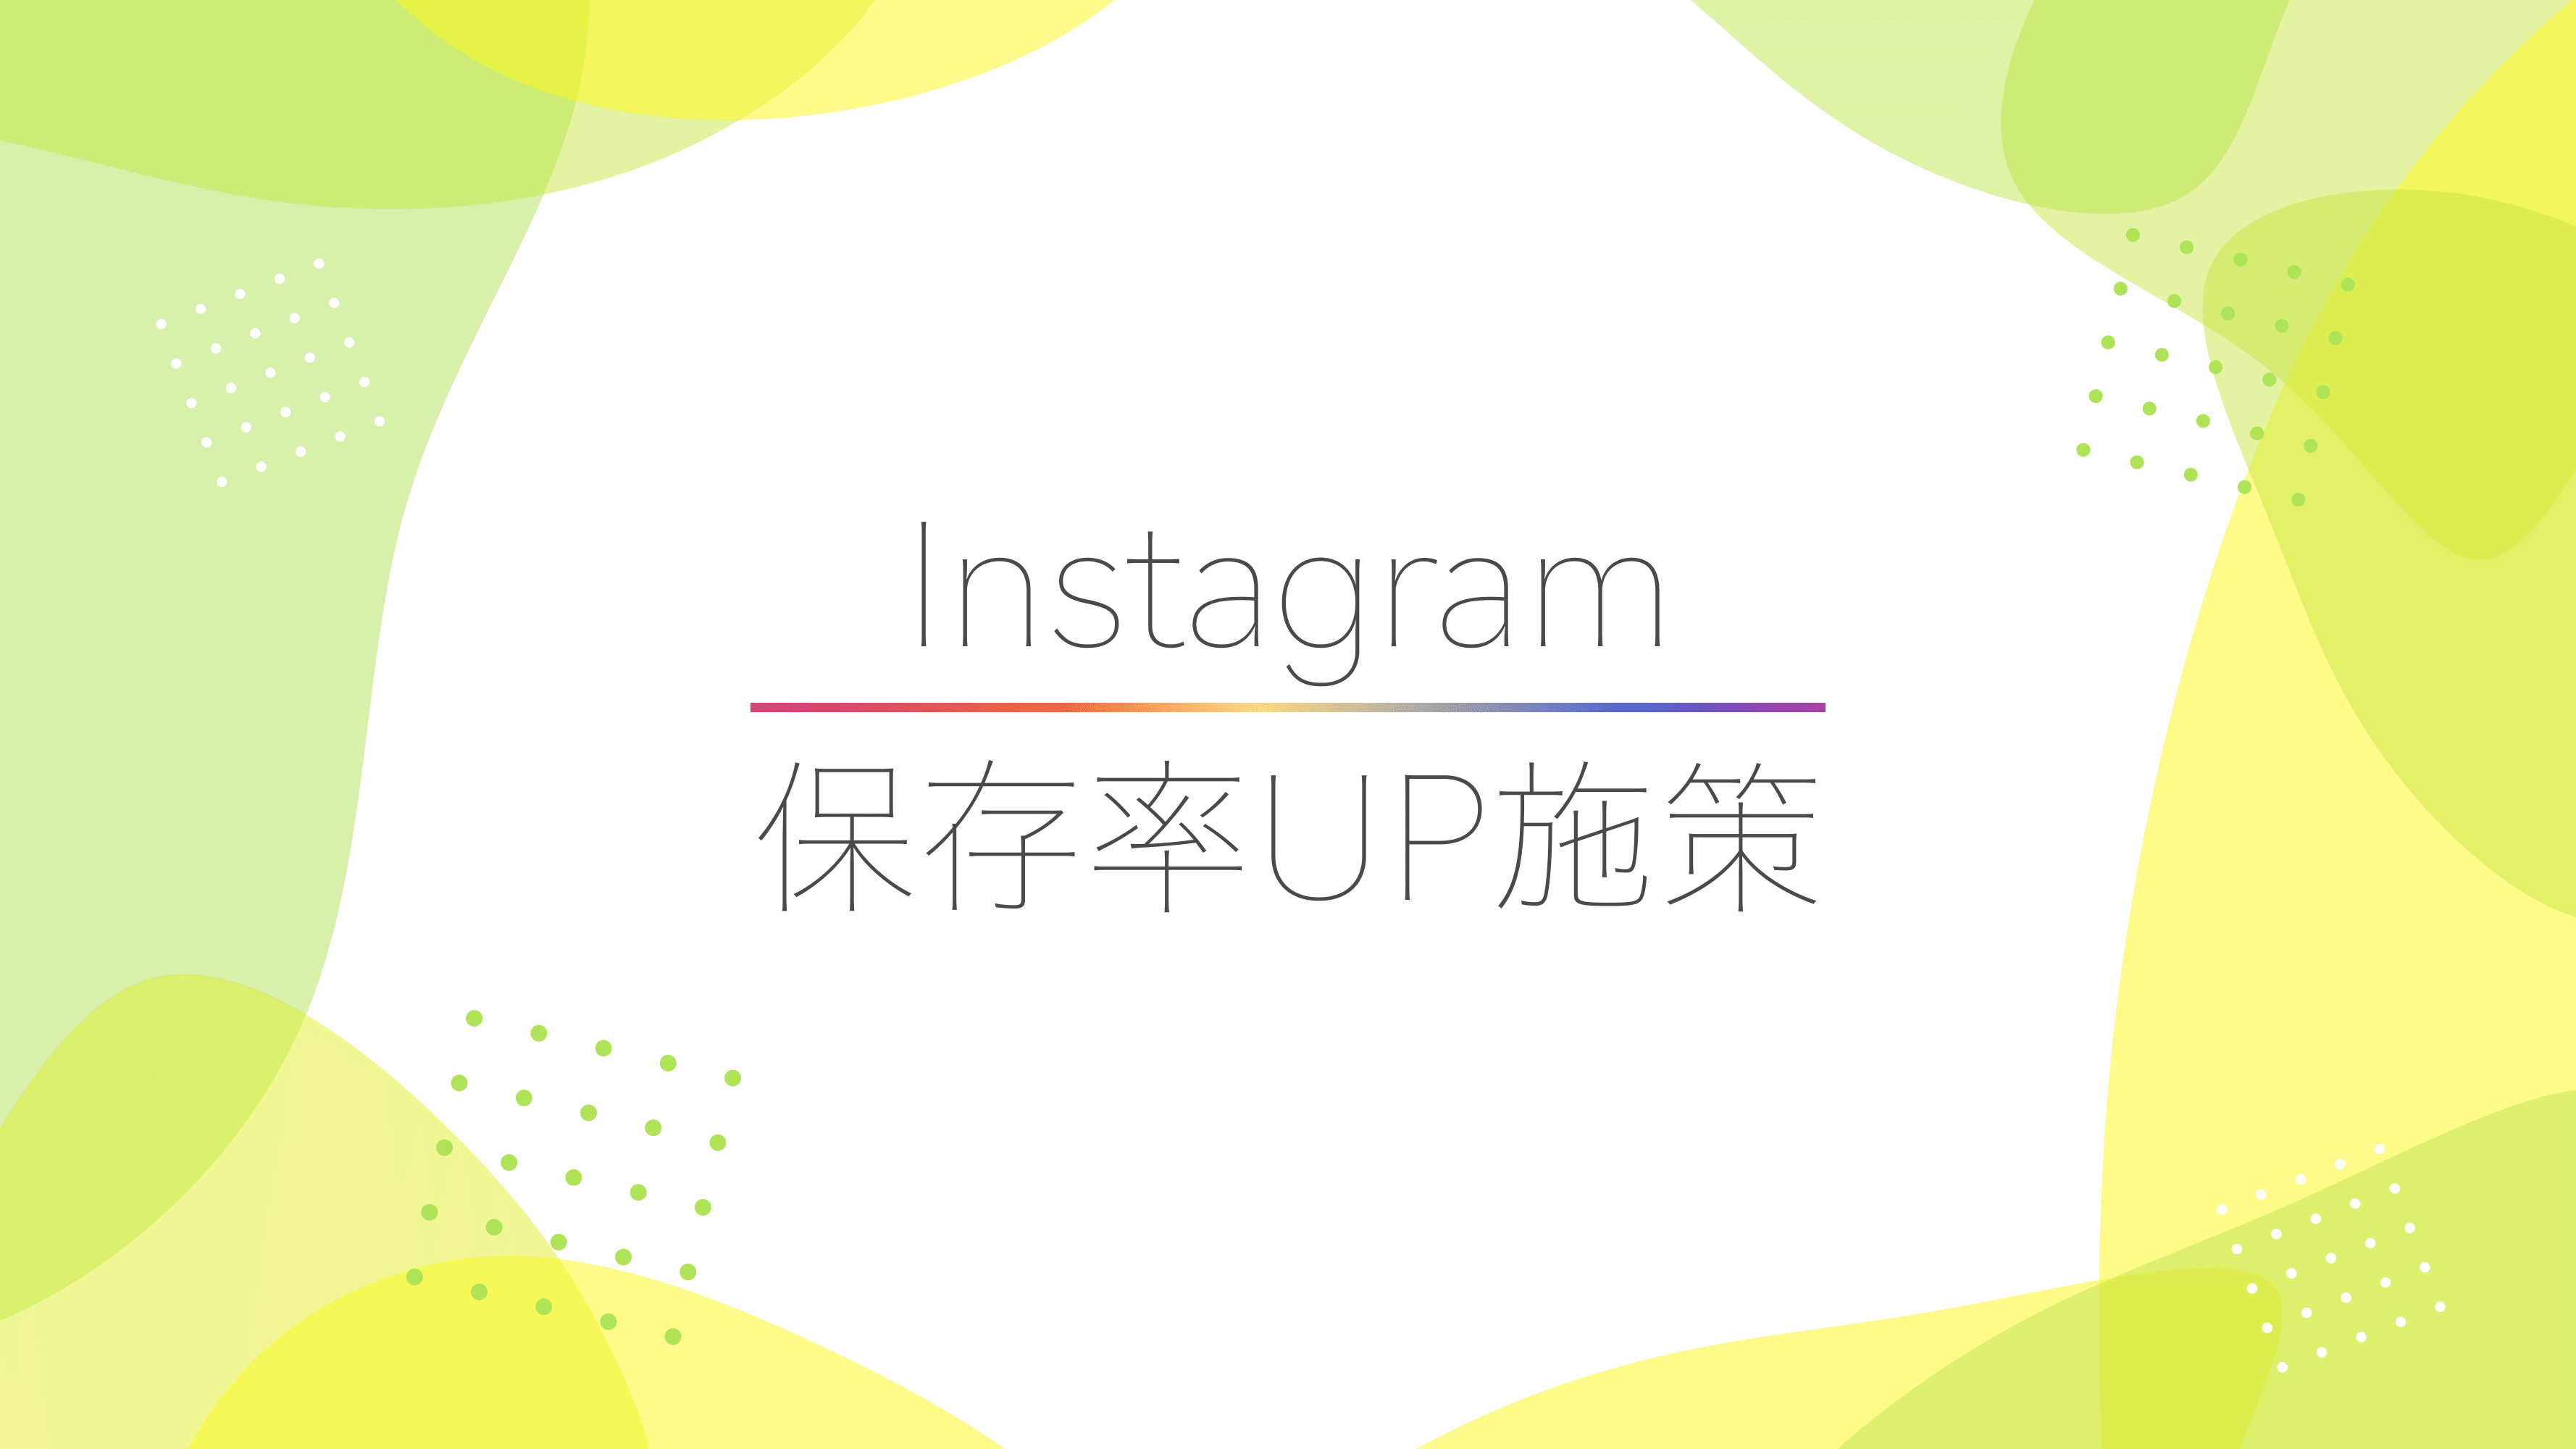 Instagrambookmark